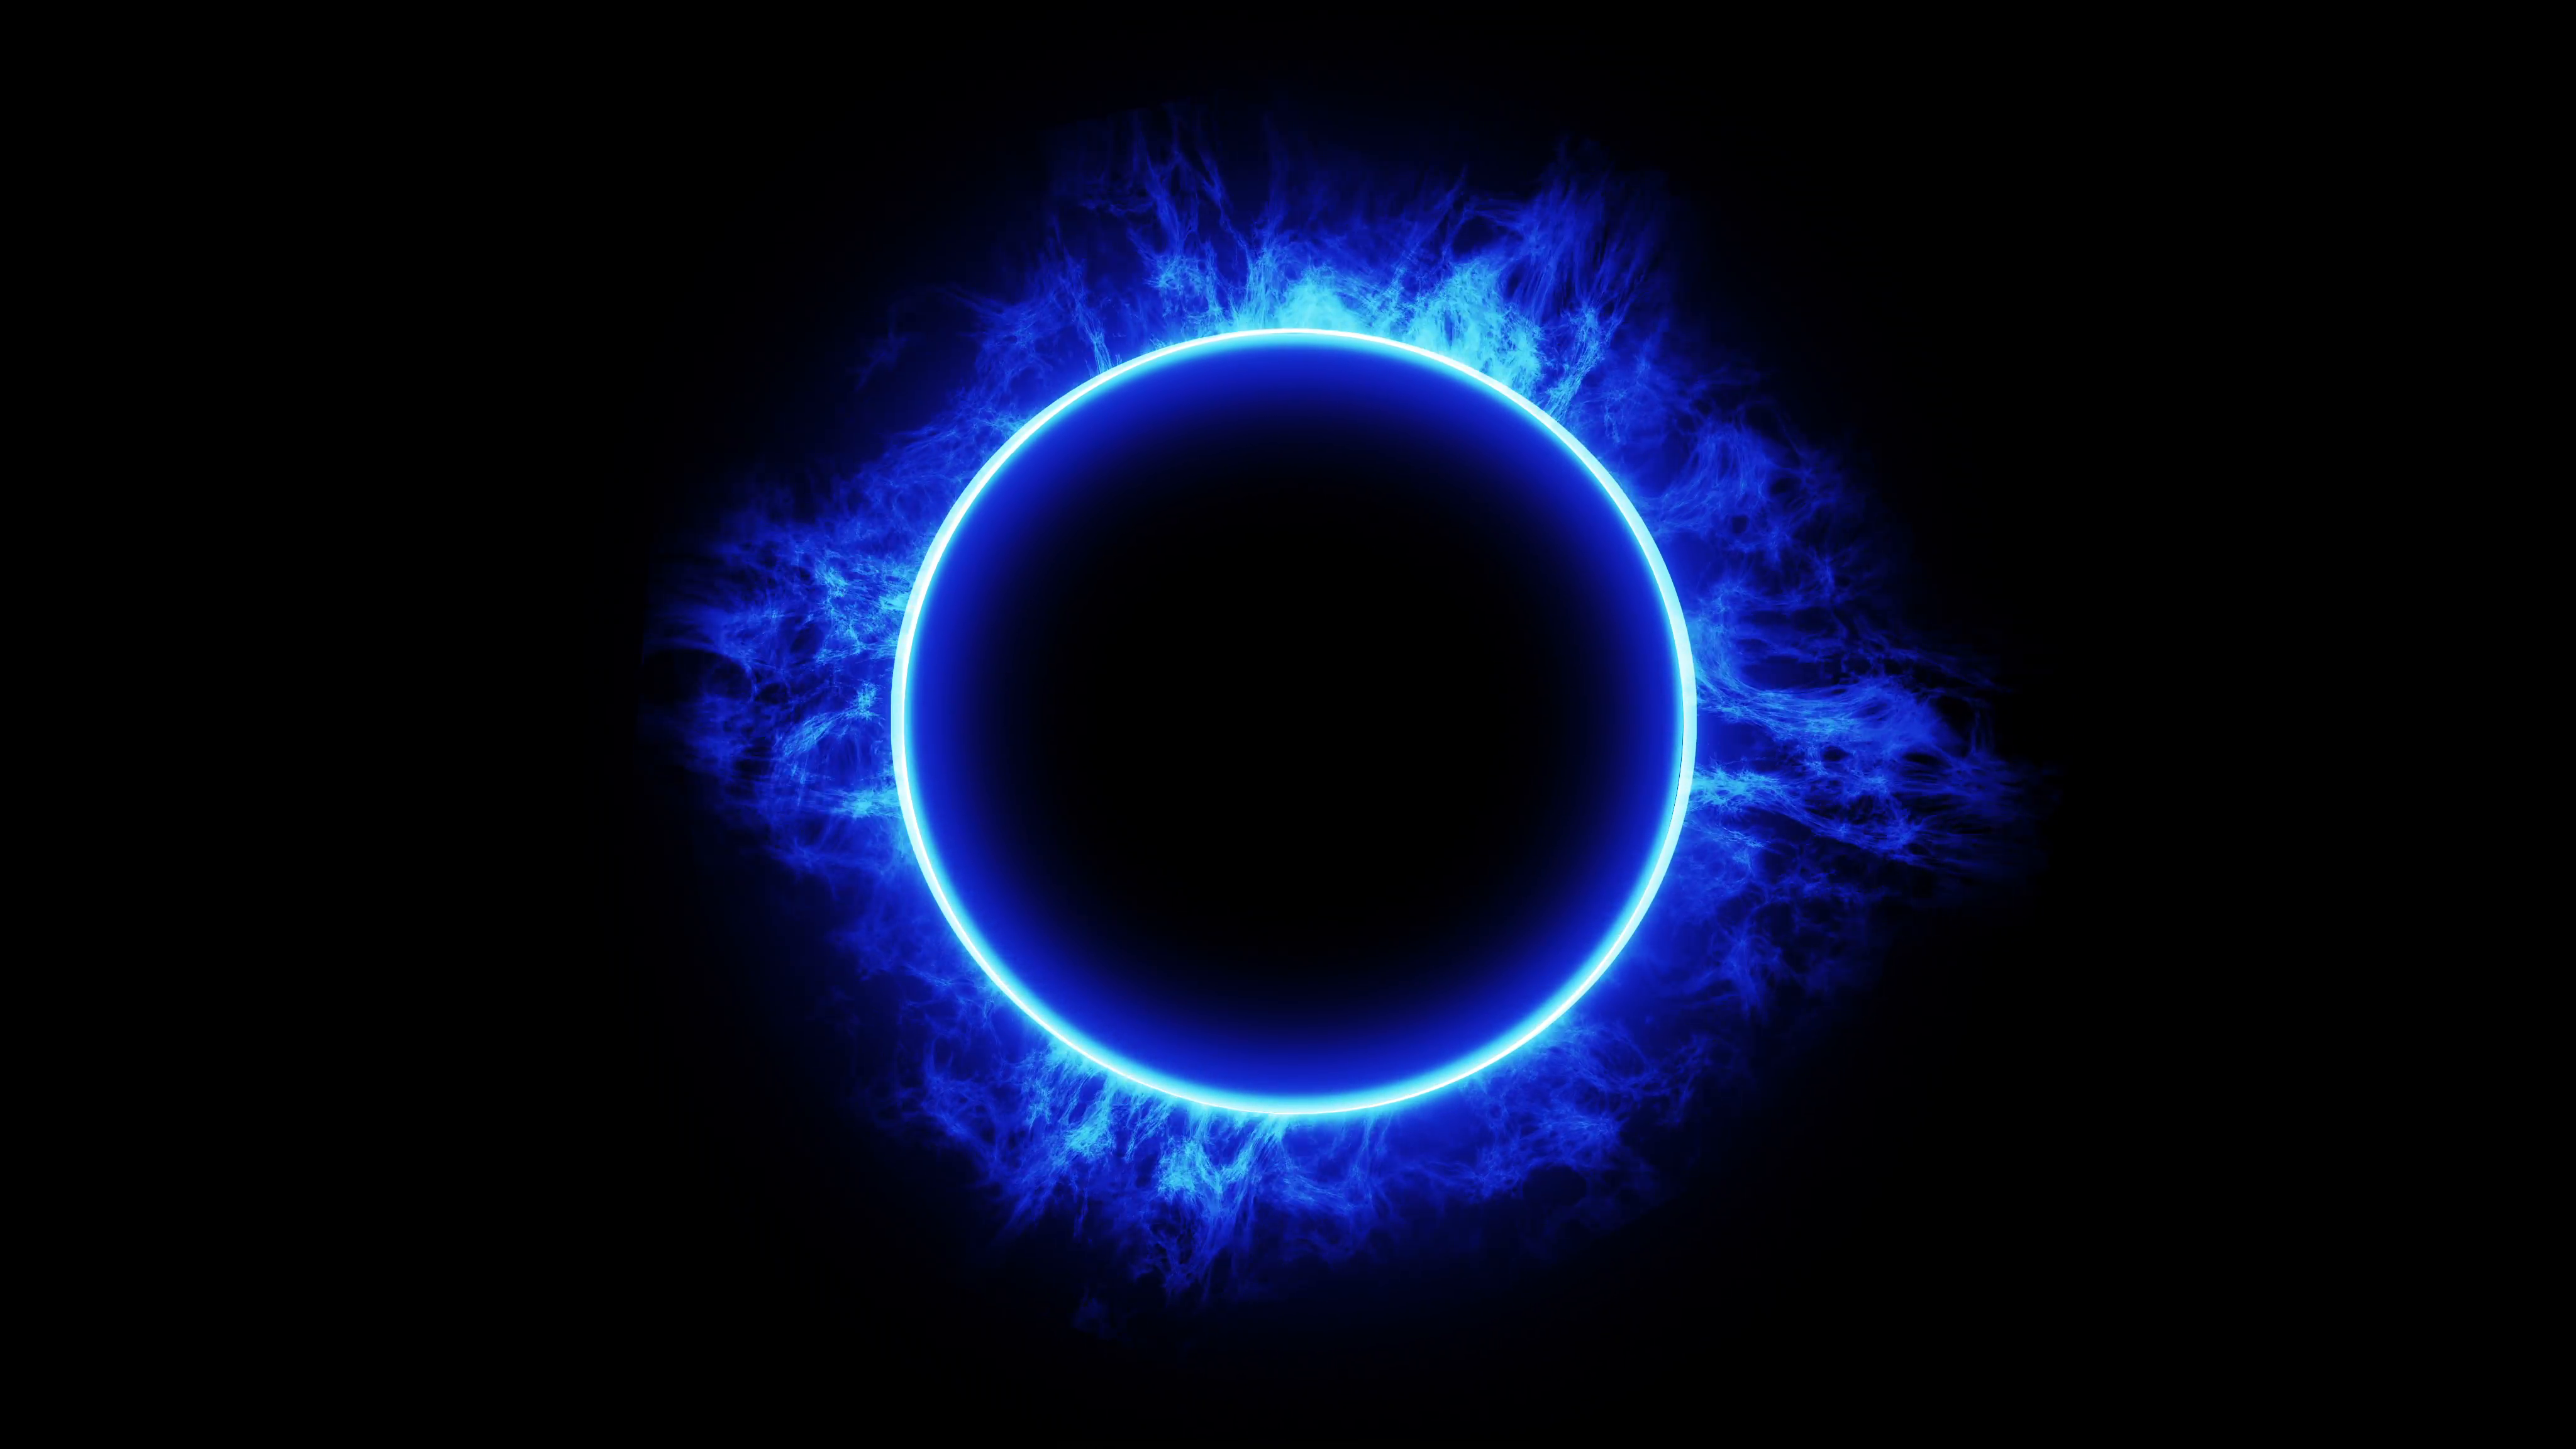 Blue Flame Black Background Image